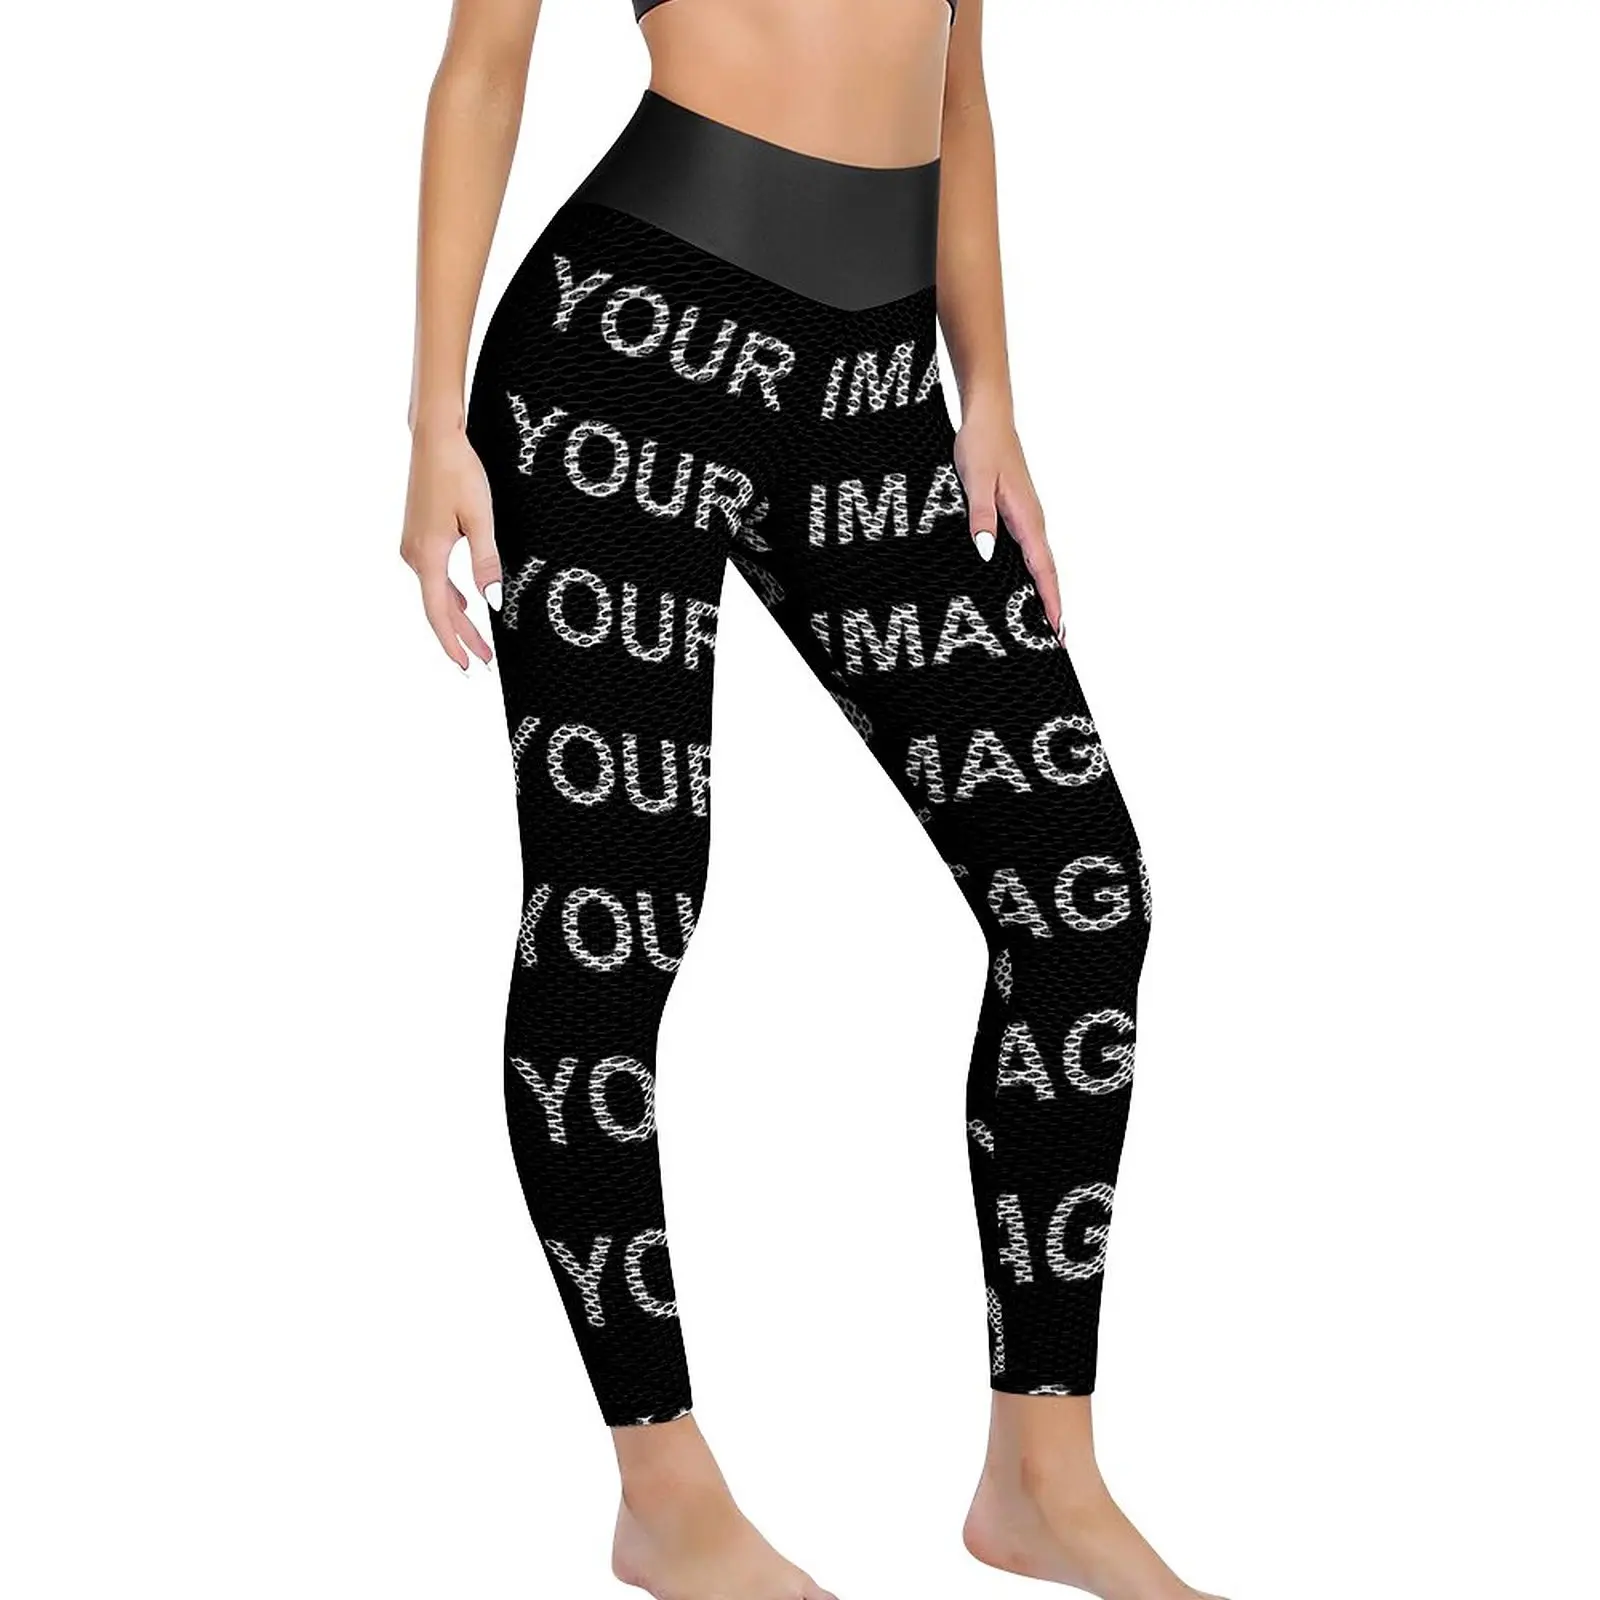 Your Image Customized Yoga Pants Custom Made Design Workout Leggings High Waist Stretchy Sport Pants Retro Graphic Yoga Legging